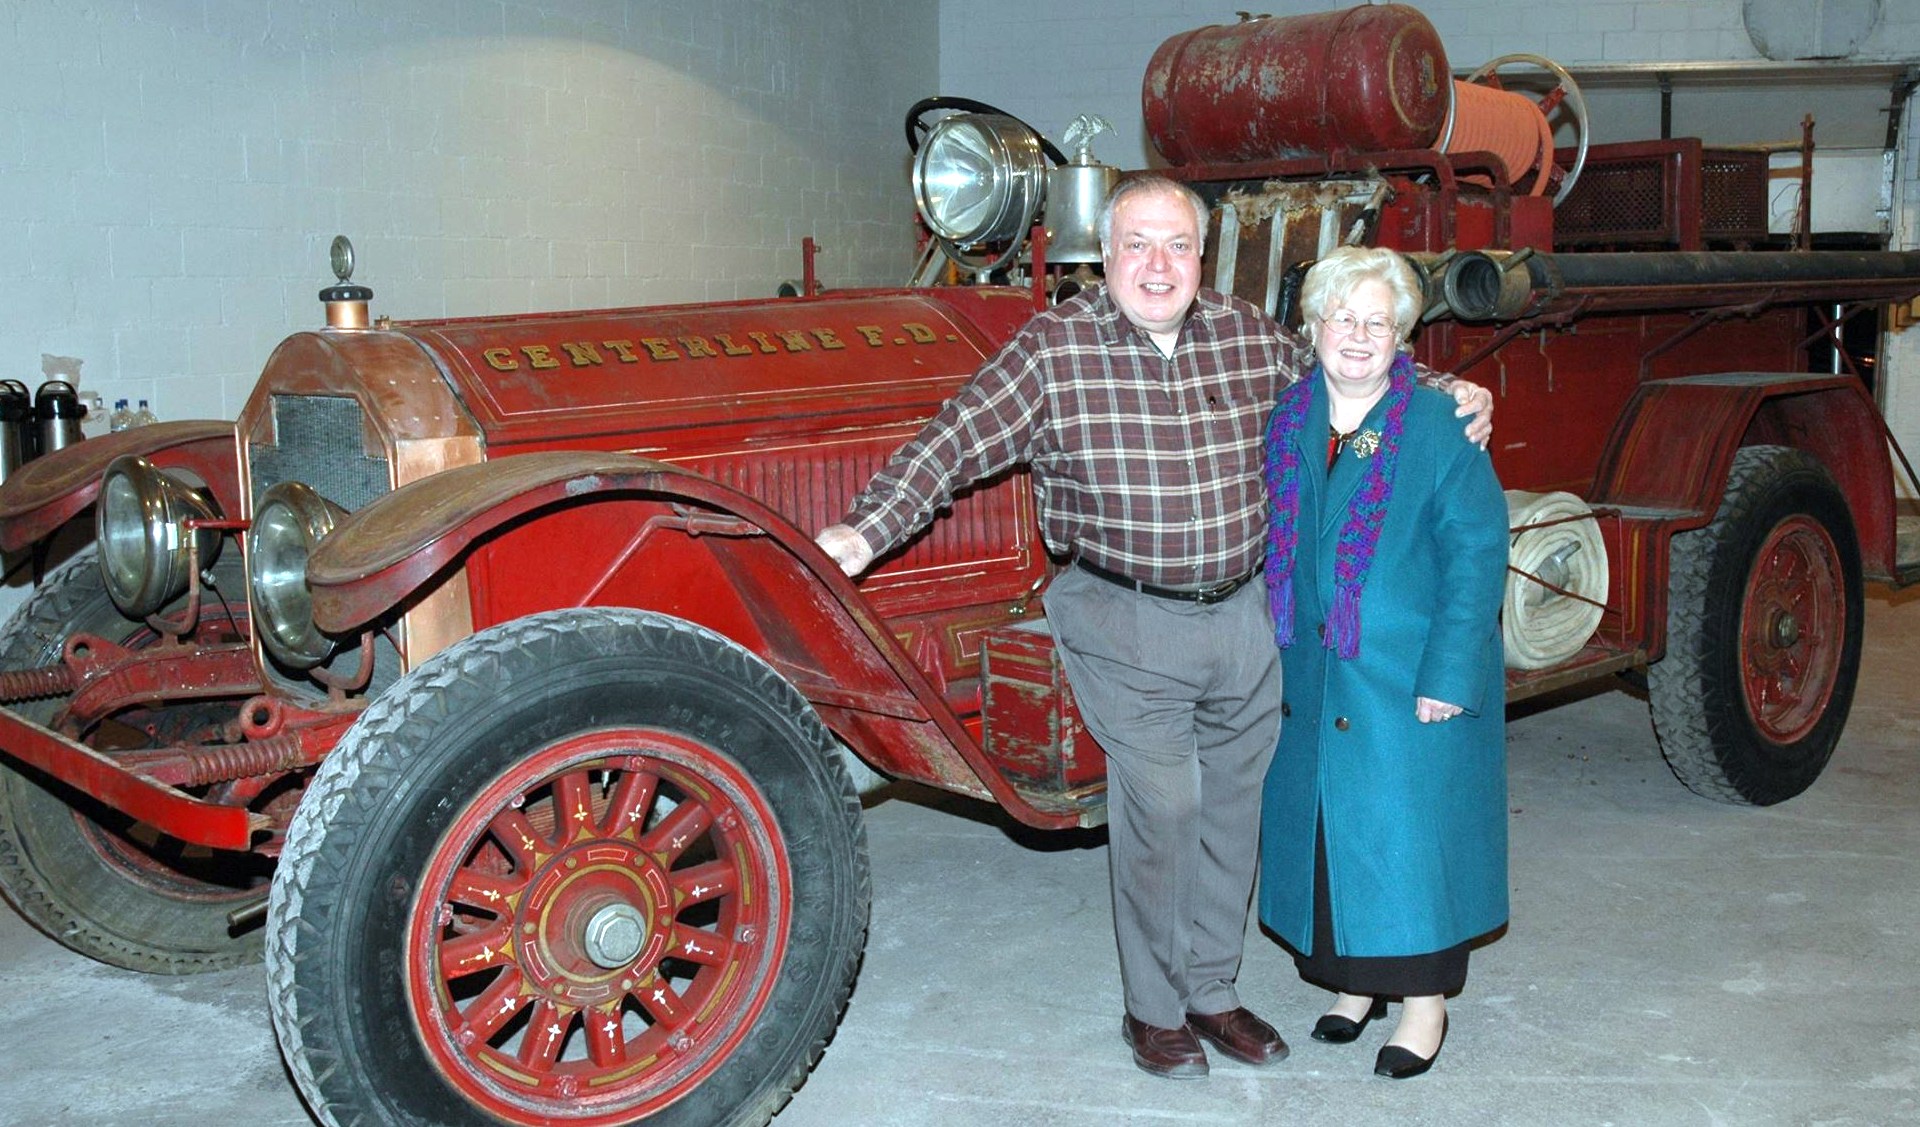 David and Kathy Hanselman, January 18, 2007